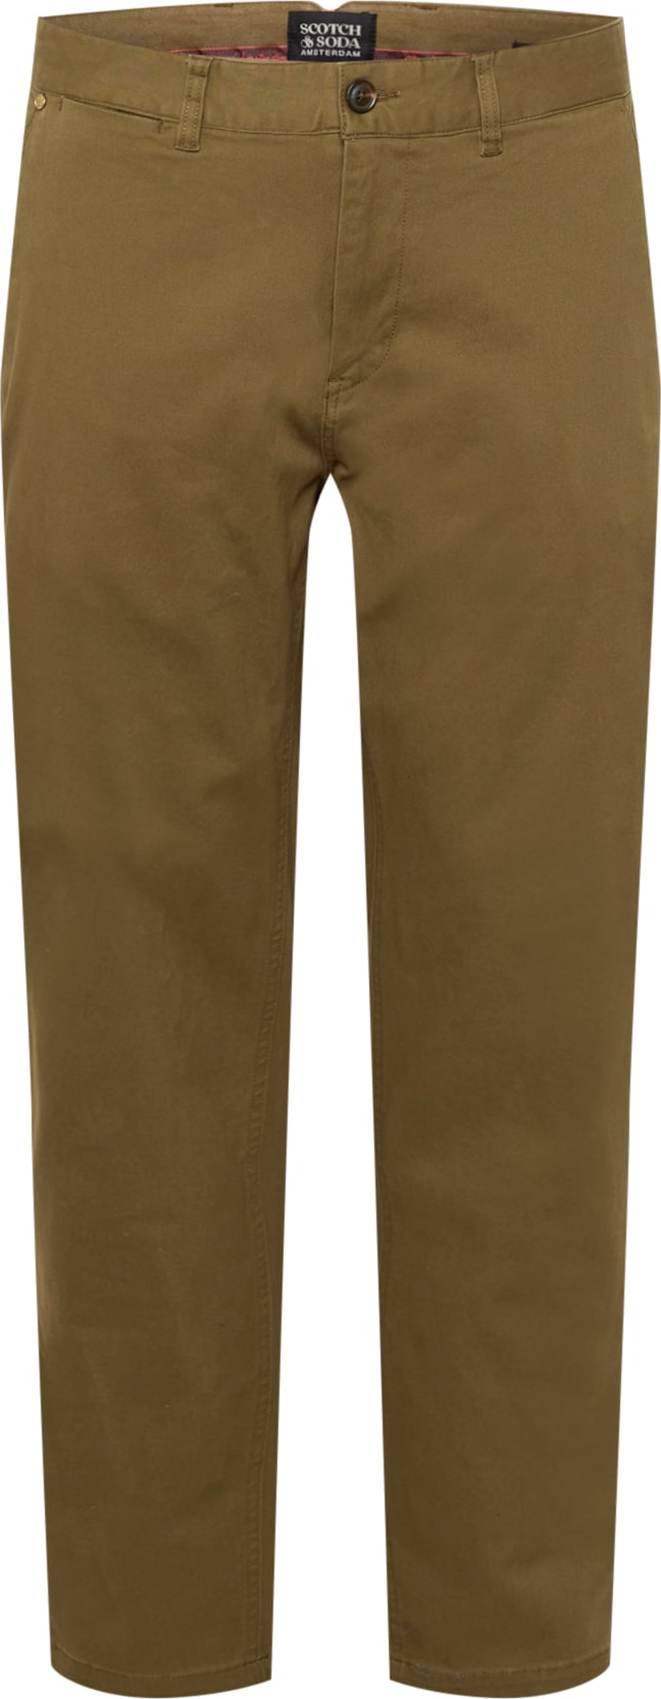 SCOTCH & SODA Chino kalhoty 'STUART' khaki